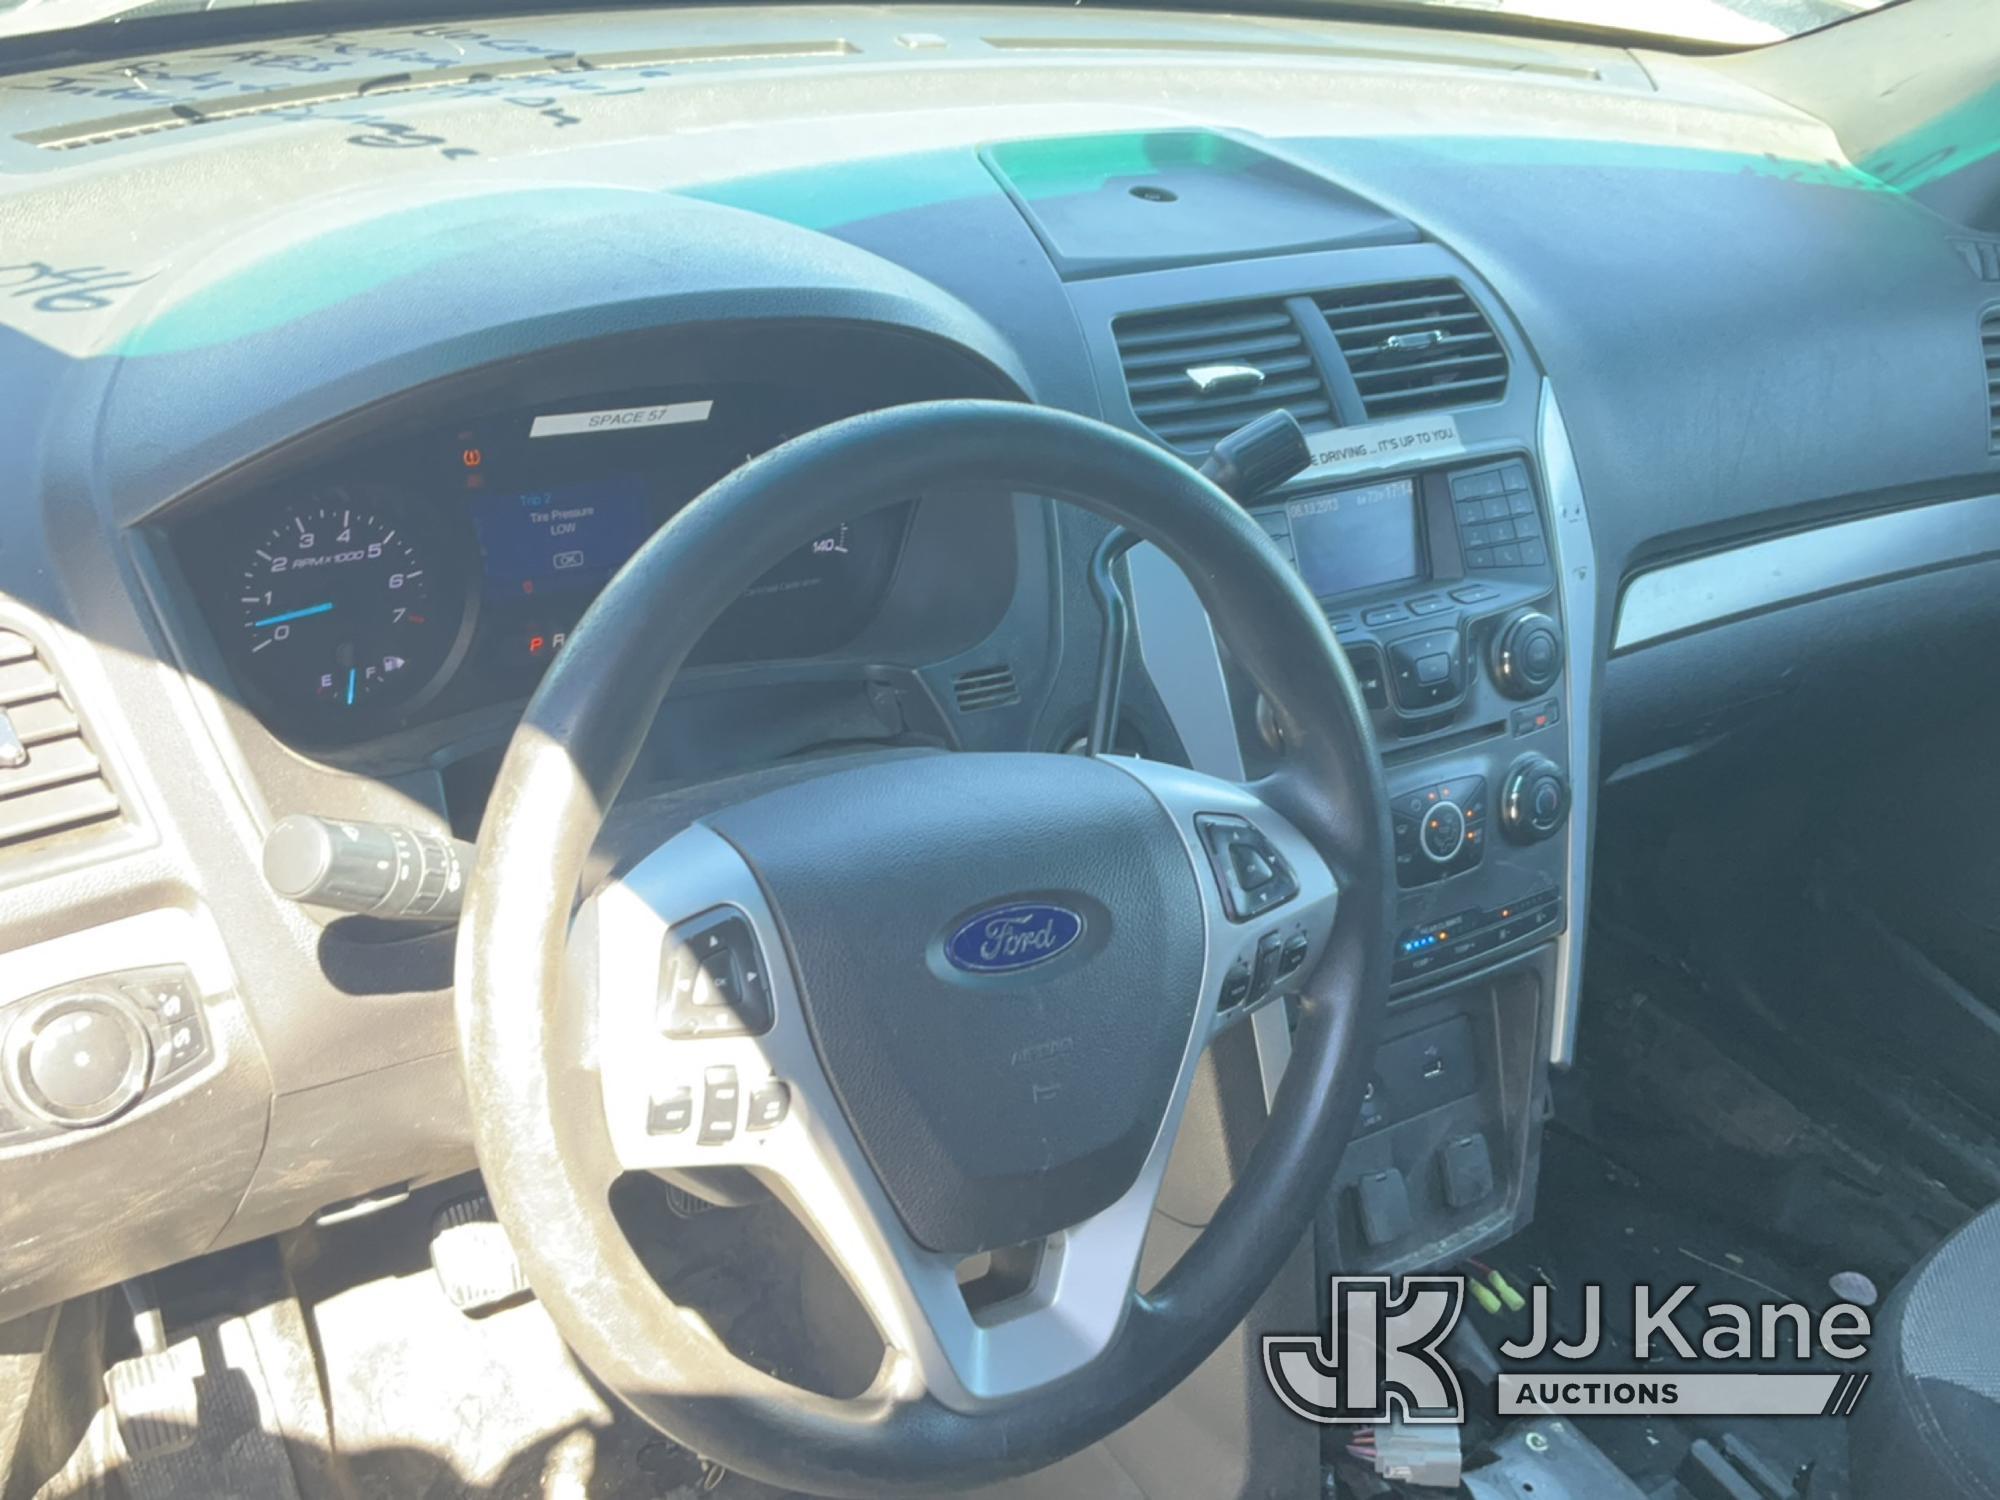 (Las Vegas, NV) 2014 Ford Explorer AWD Police Interceptor Body & Interior Damage, No Console, Tracti